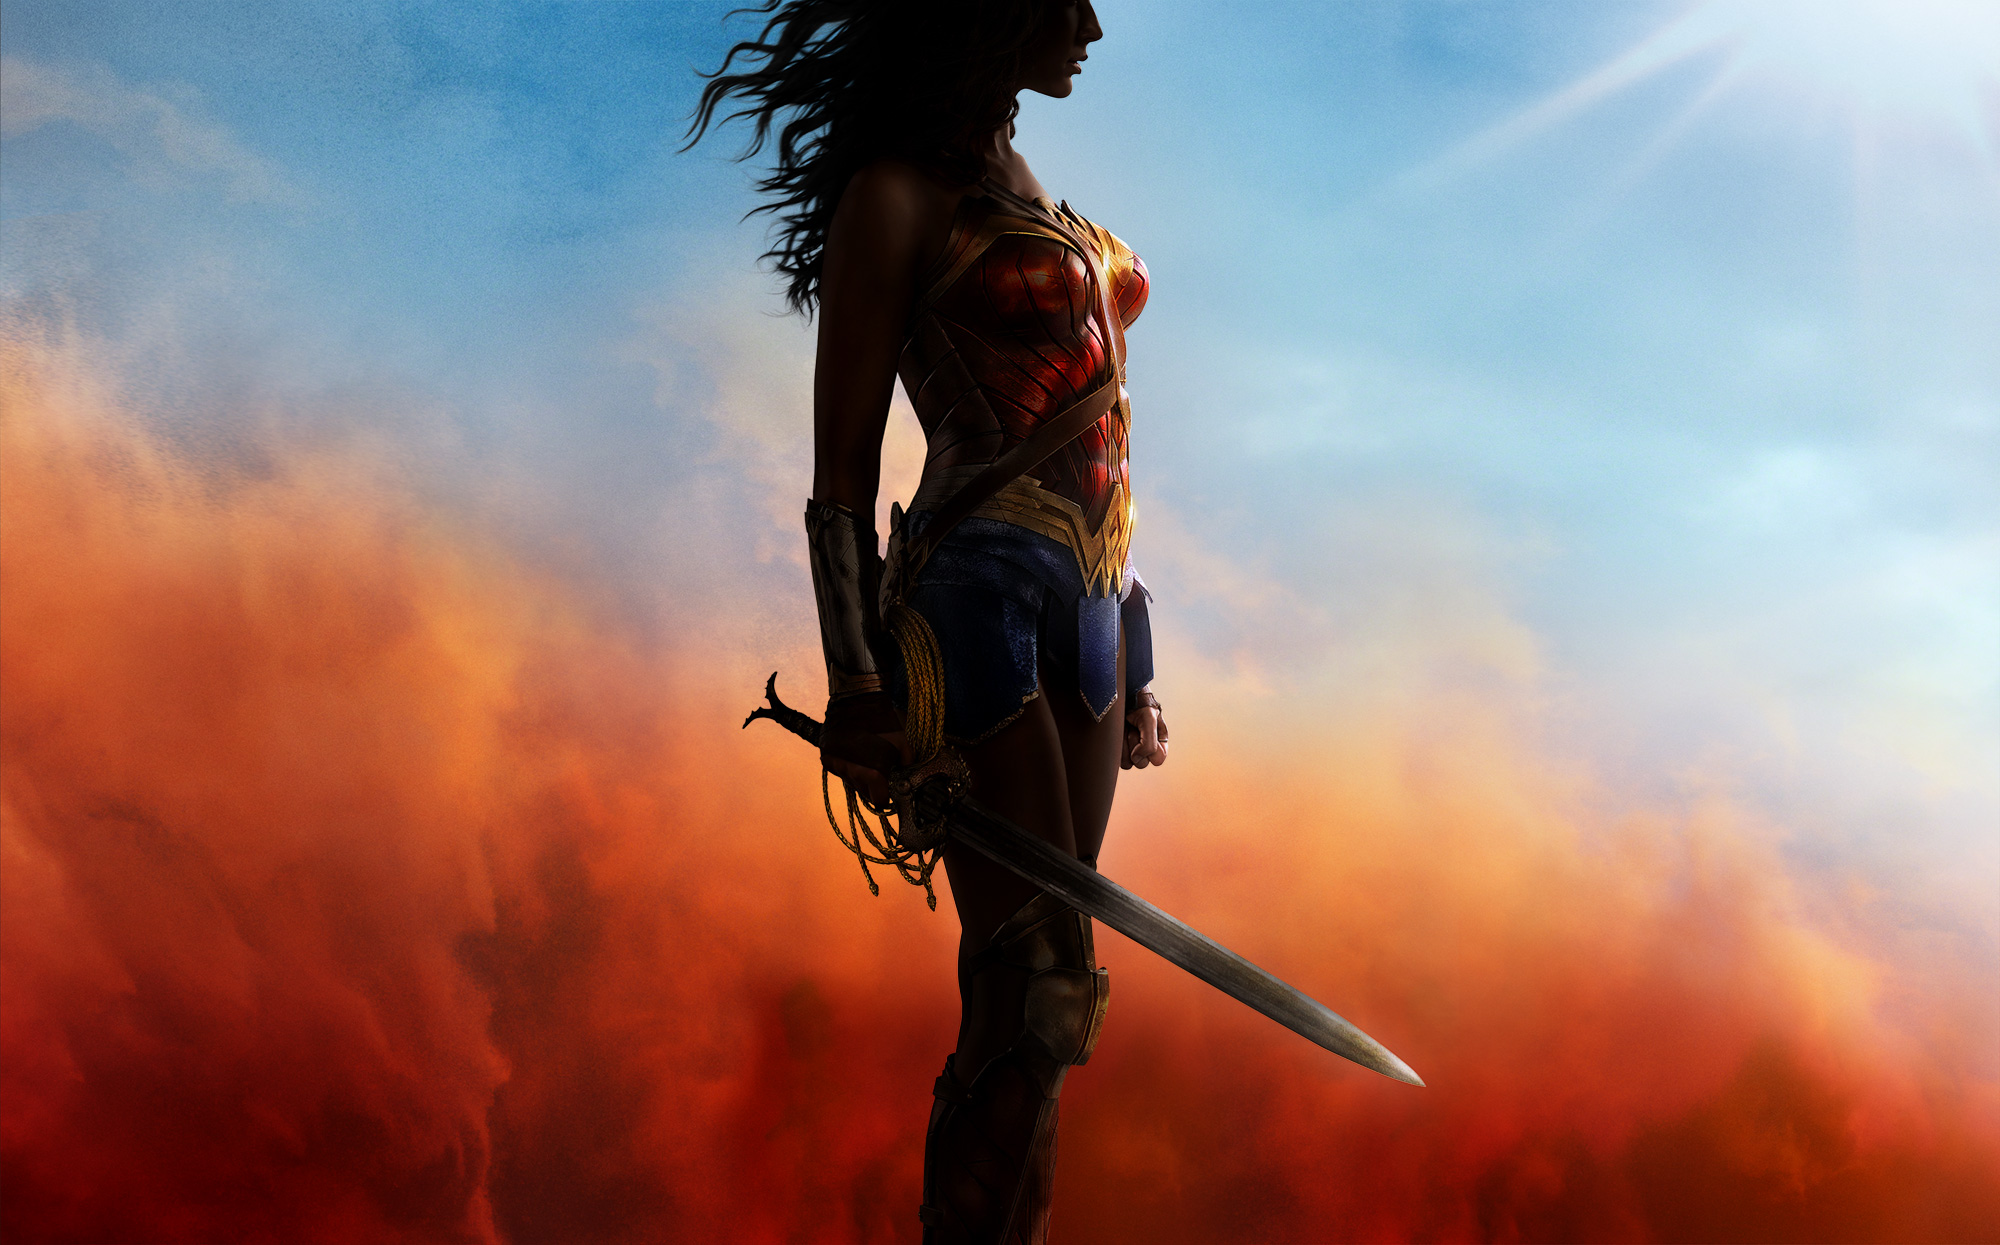  Wonder Woman HD Wallpapers Backgrounds Wallpaper 